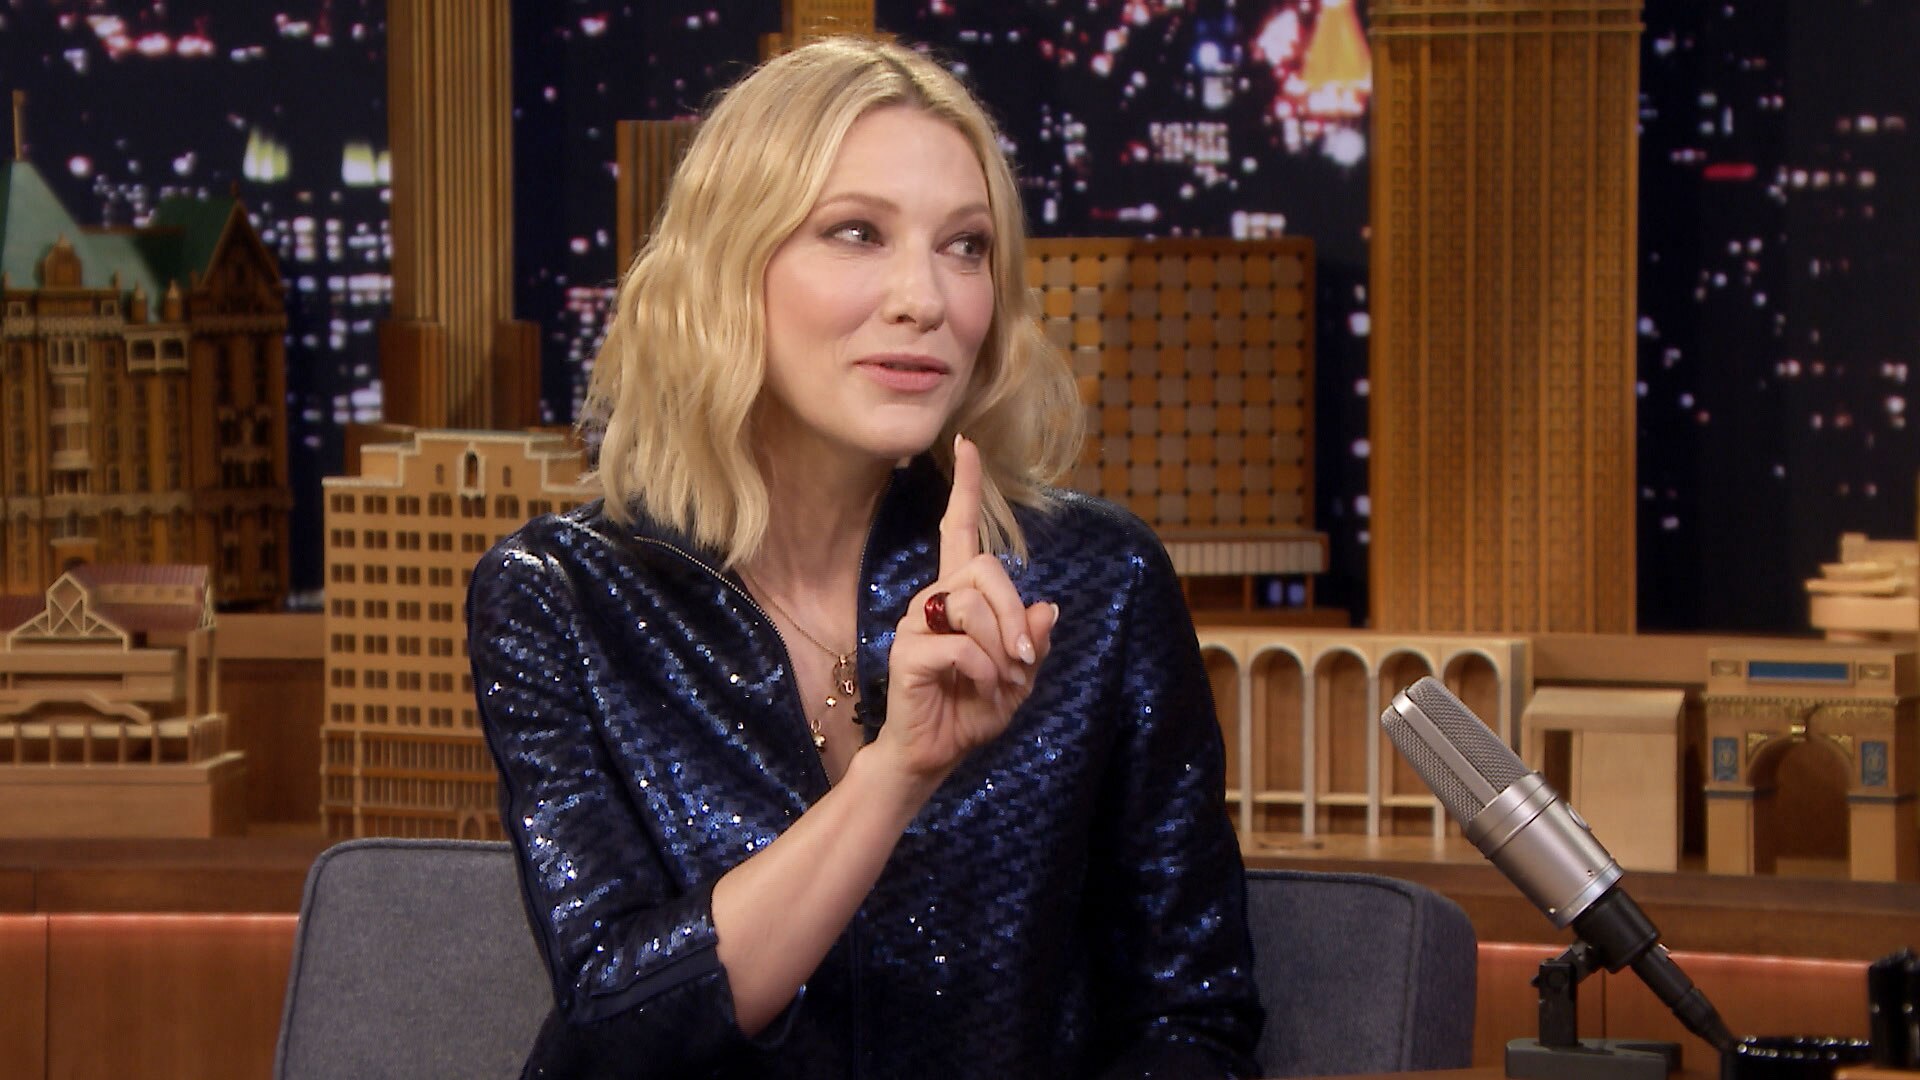 Watch The Tonight Show Starring Jimmy Fallon Episode: Cate Blanchett